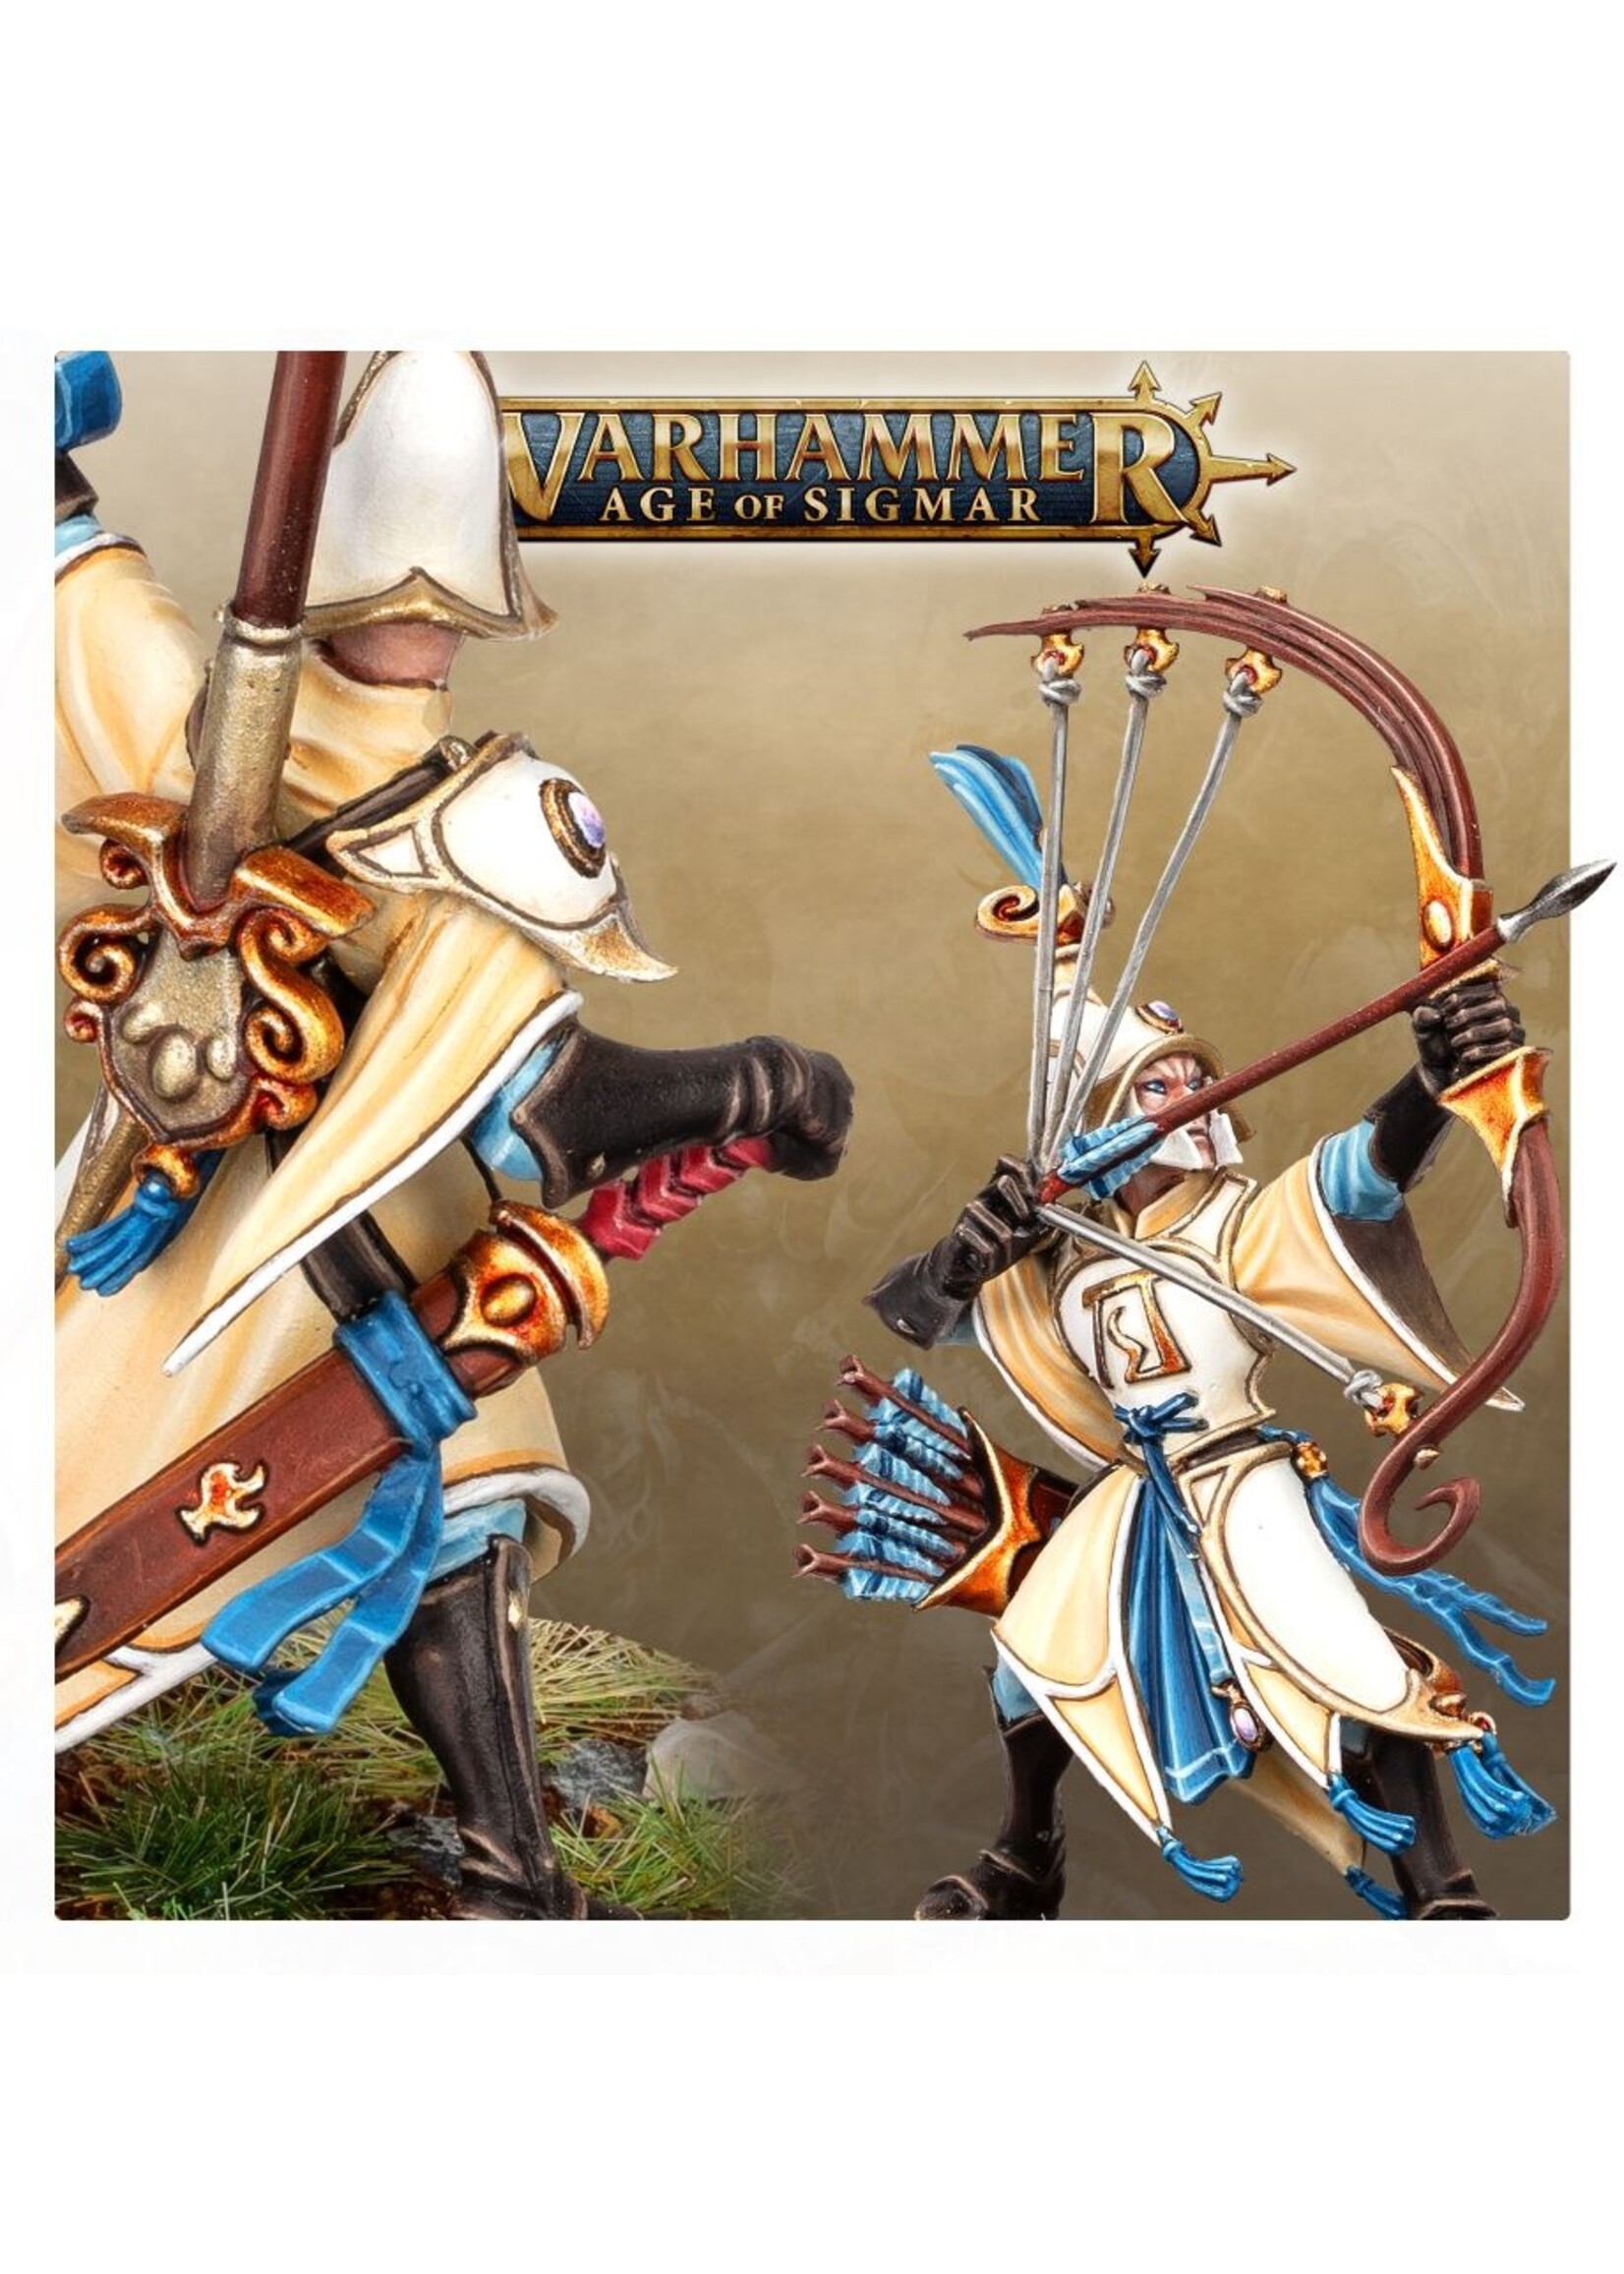 Games Workshop Lumineth Realm-Lords: Vanari Auralan Sentinels